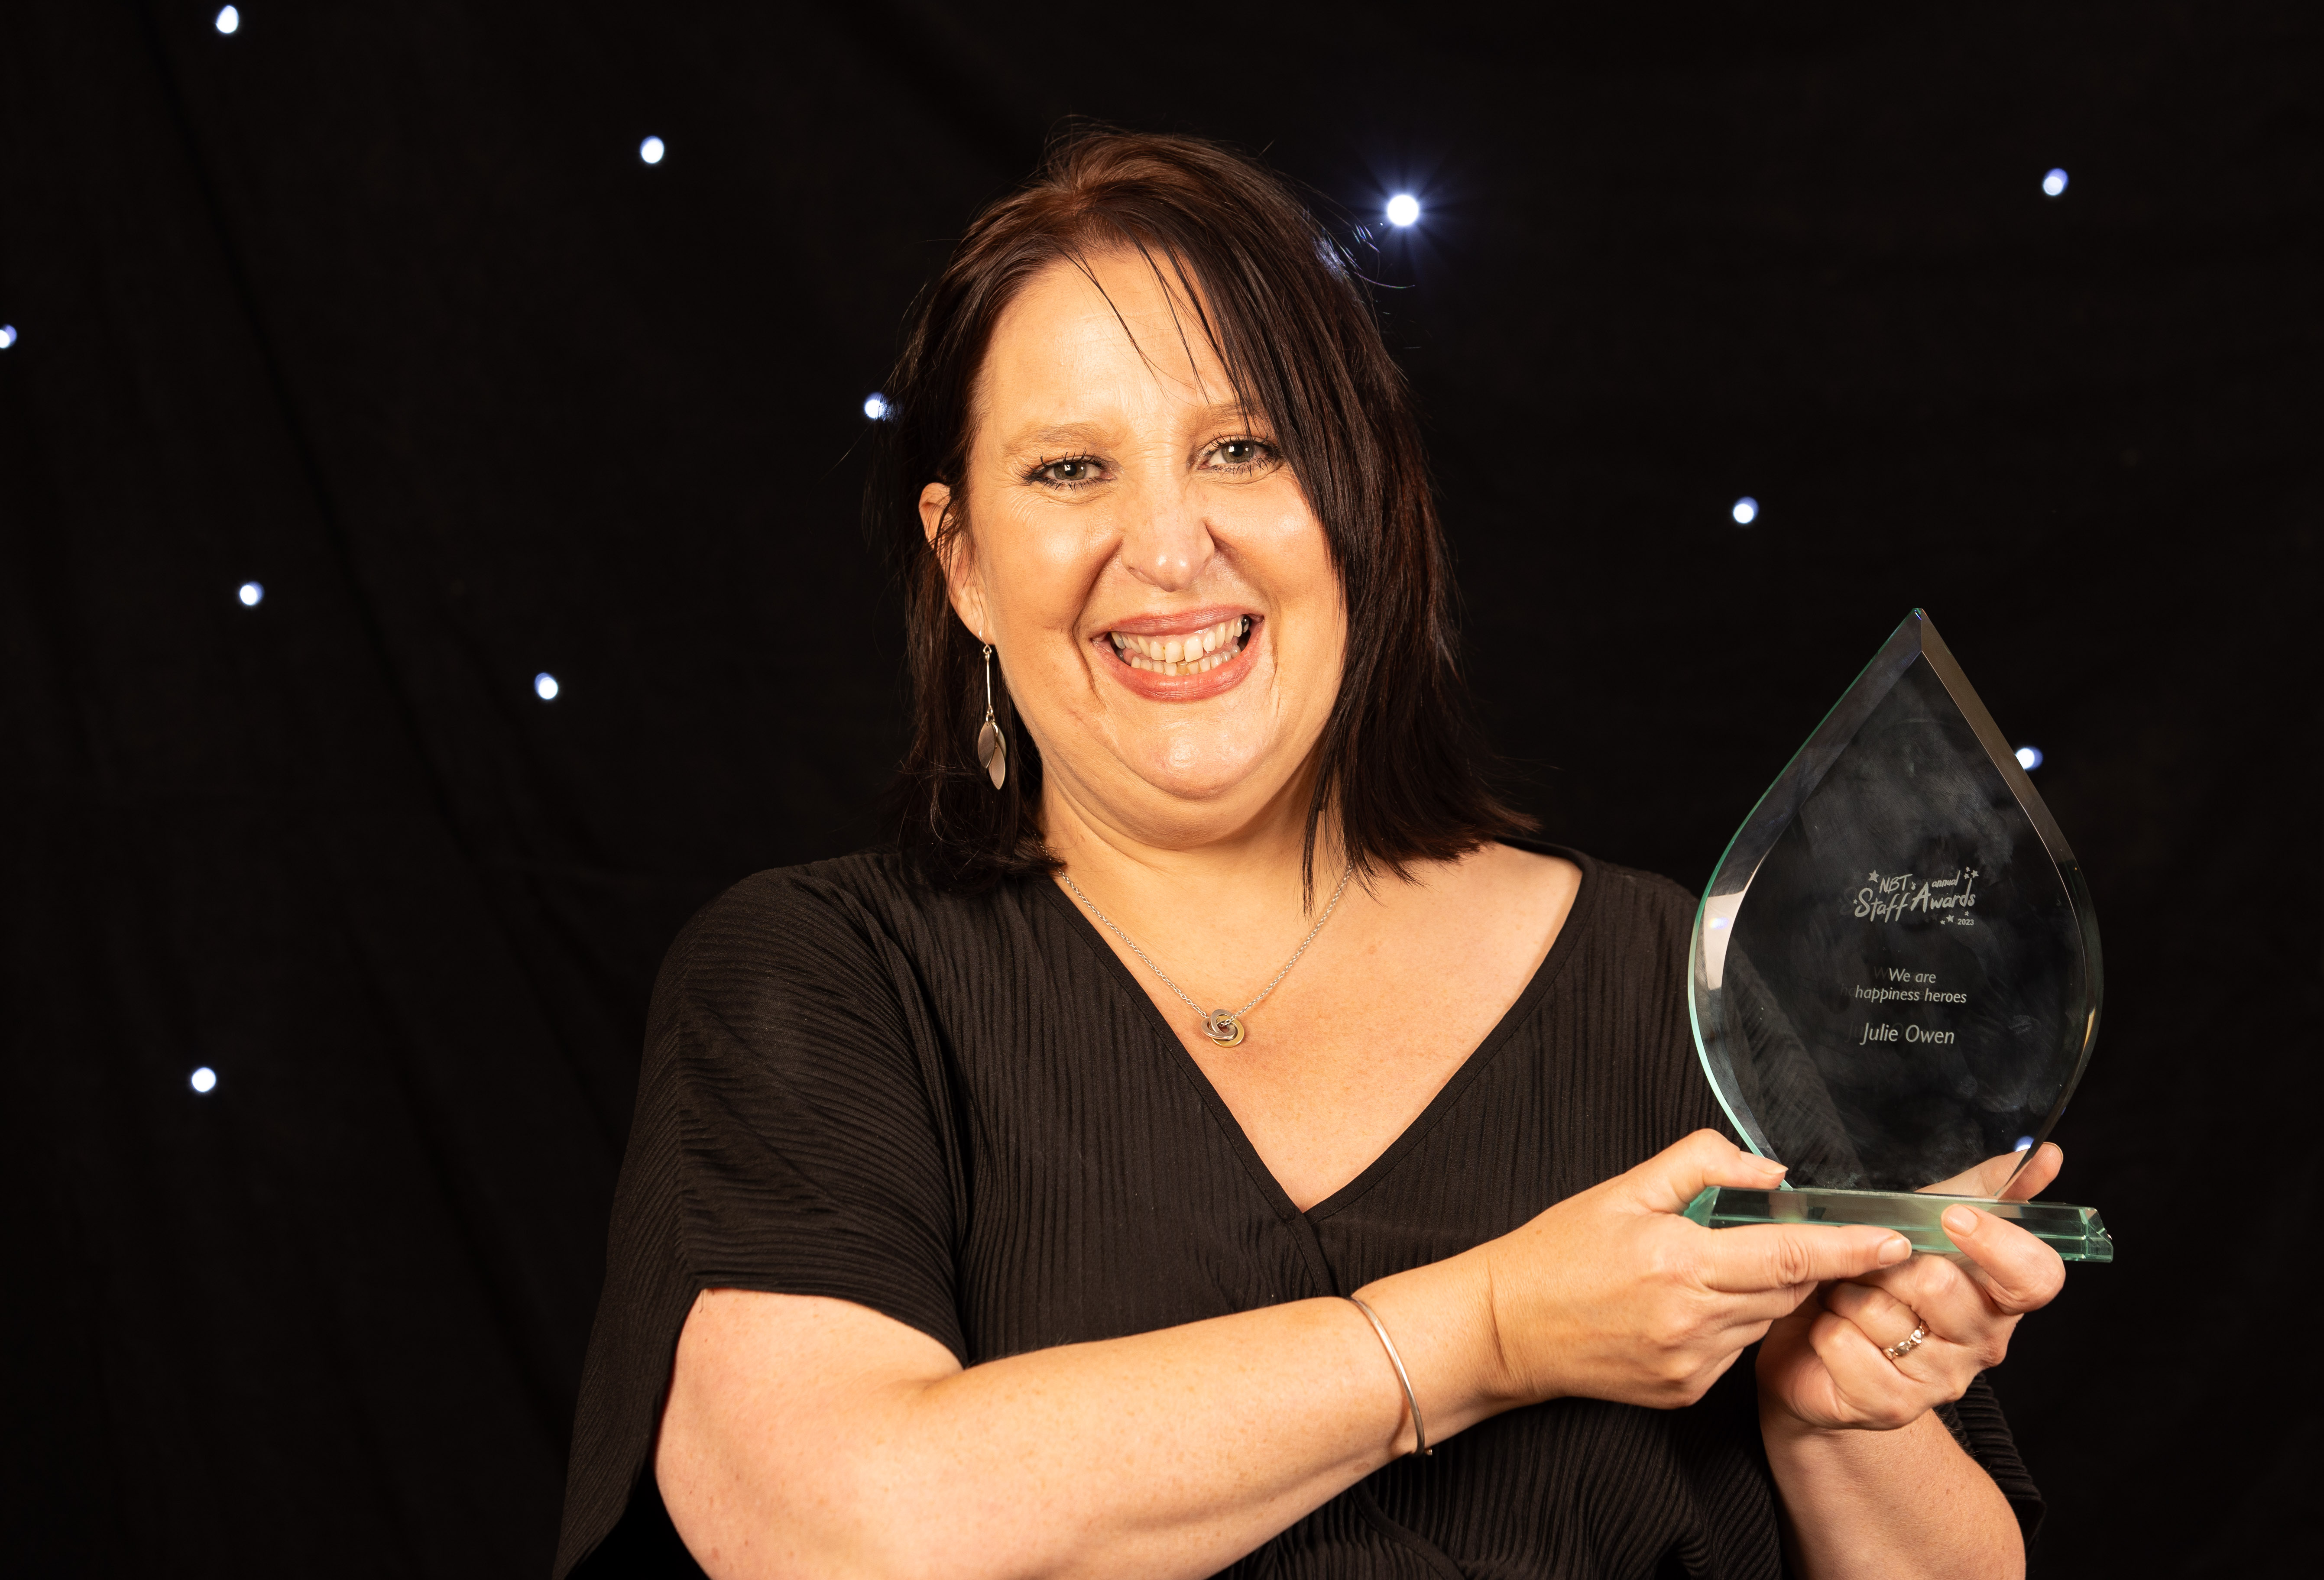 Julie Owen, winner of the We are happiness heroes award